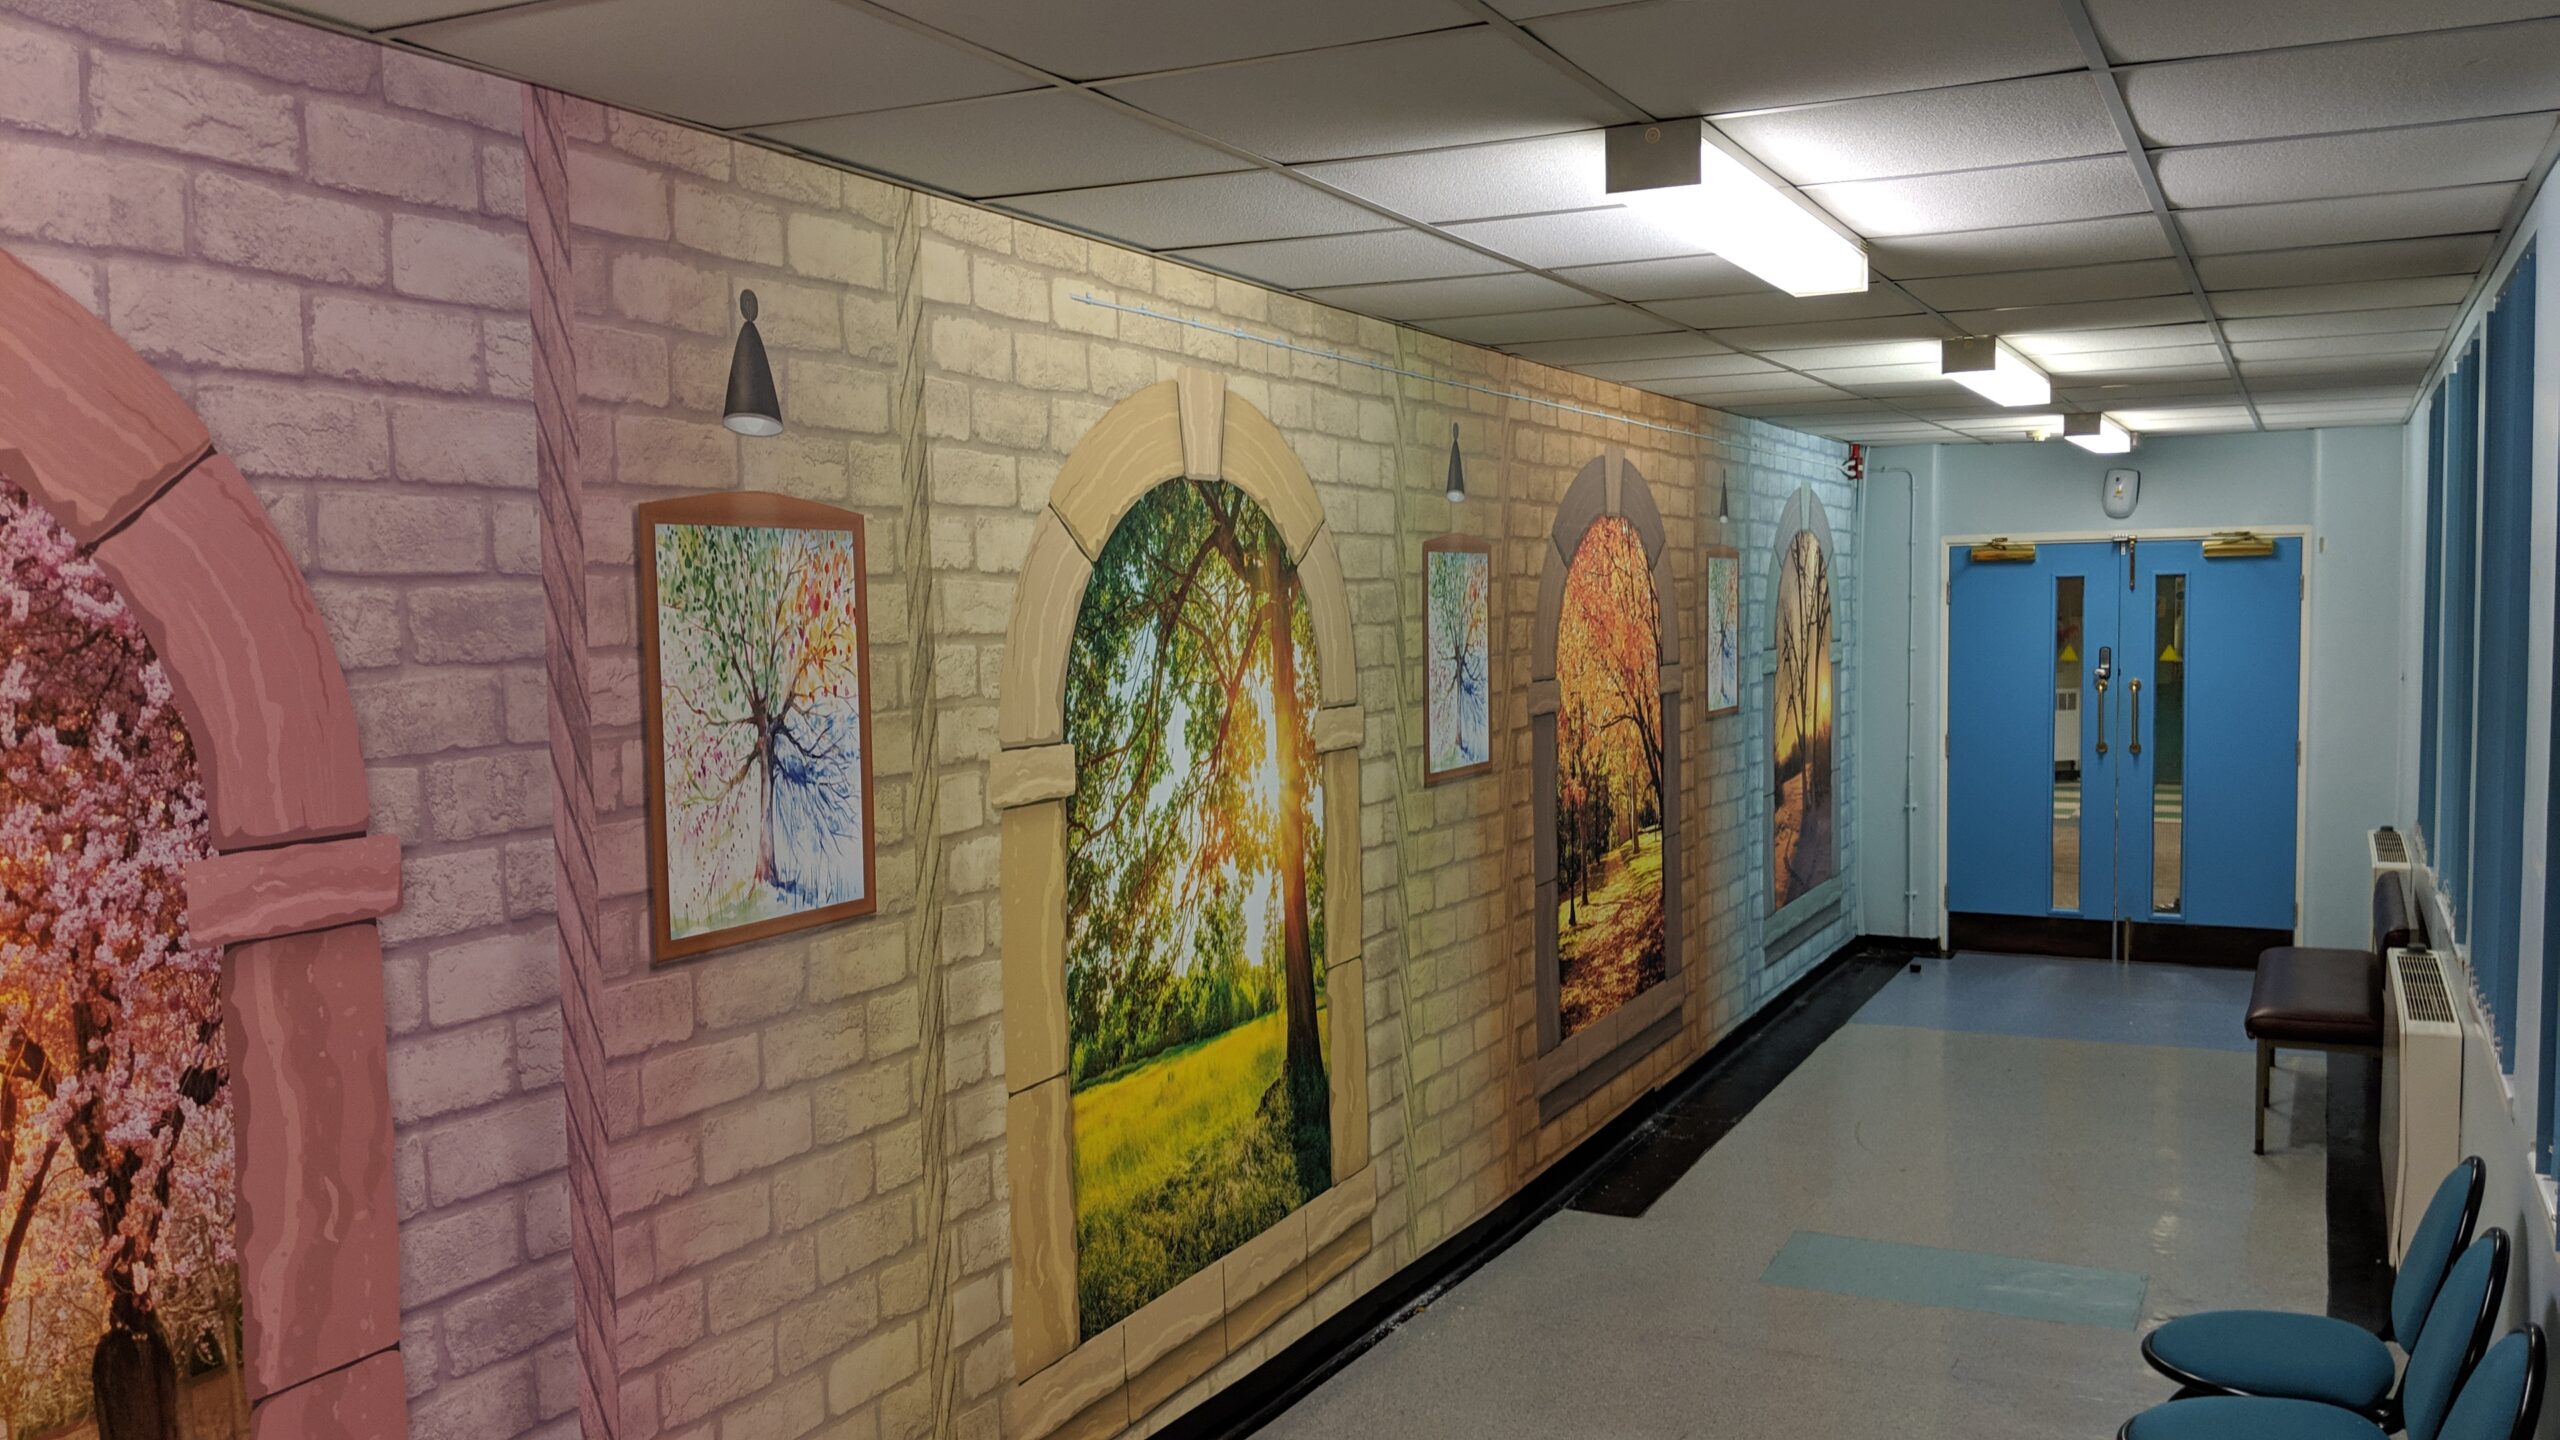 Corridor dementia mural